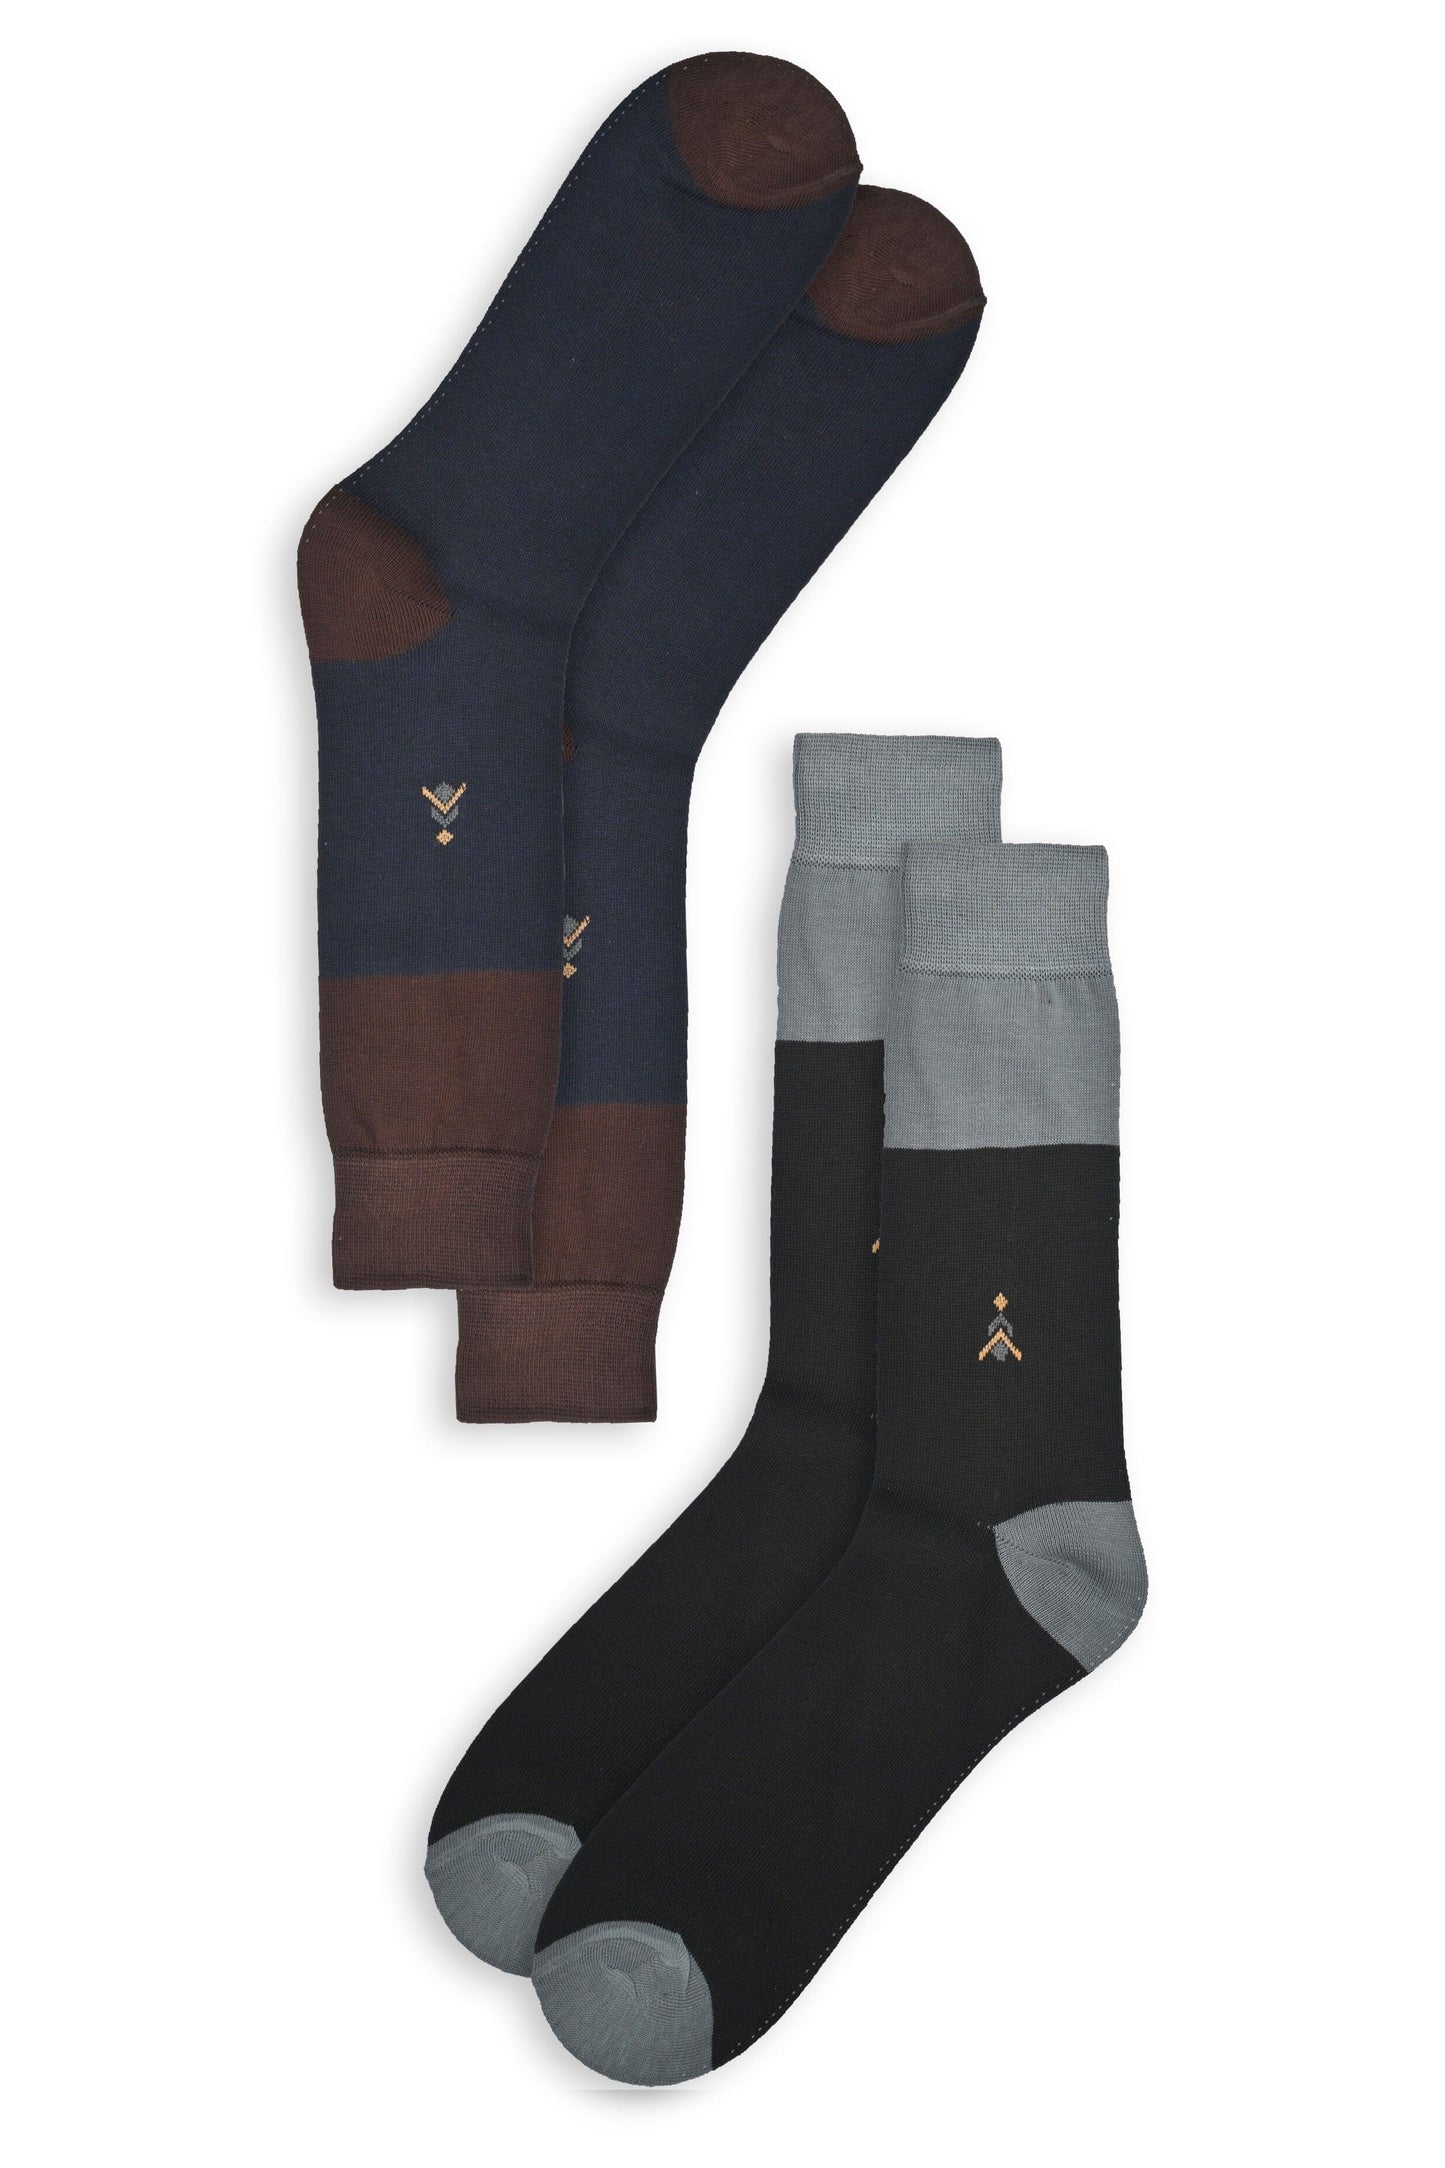 Gol Men's Combed Cotton Guamini Dress Socks - Pack Of 2 Pairs Socks KHP 